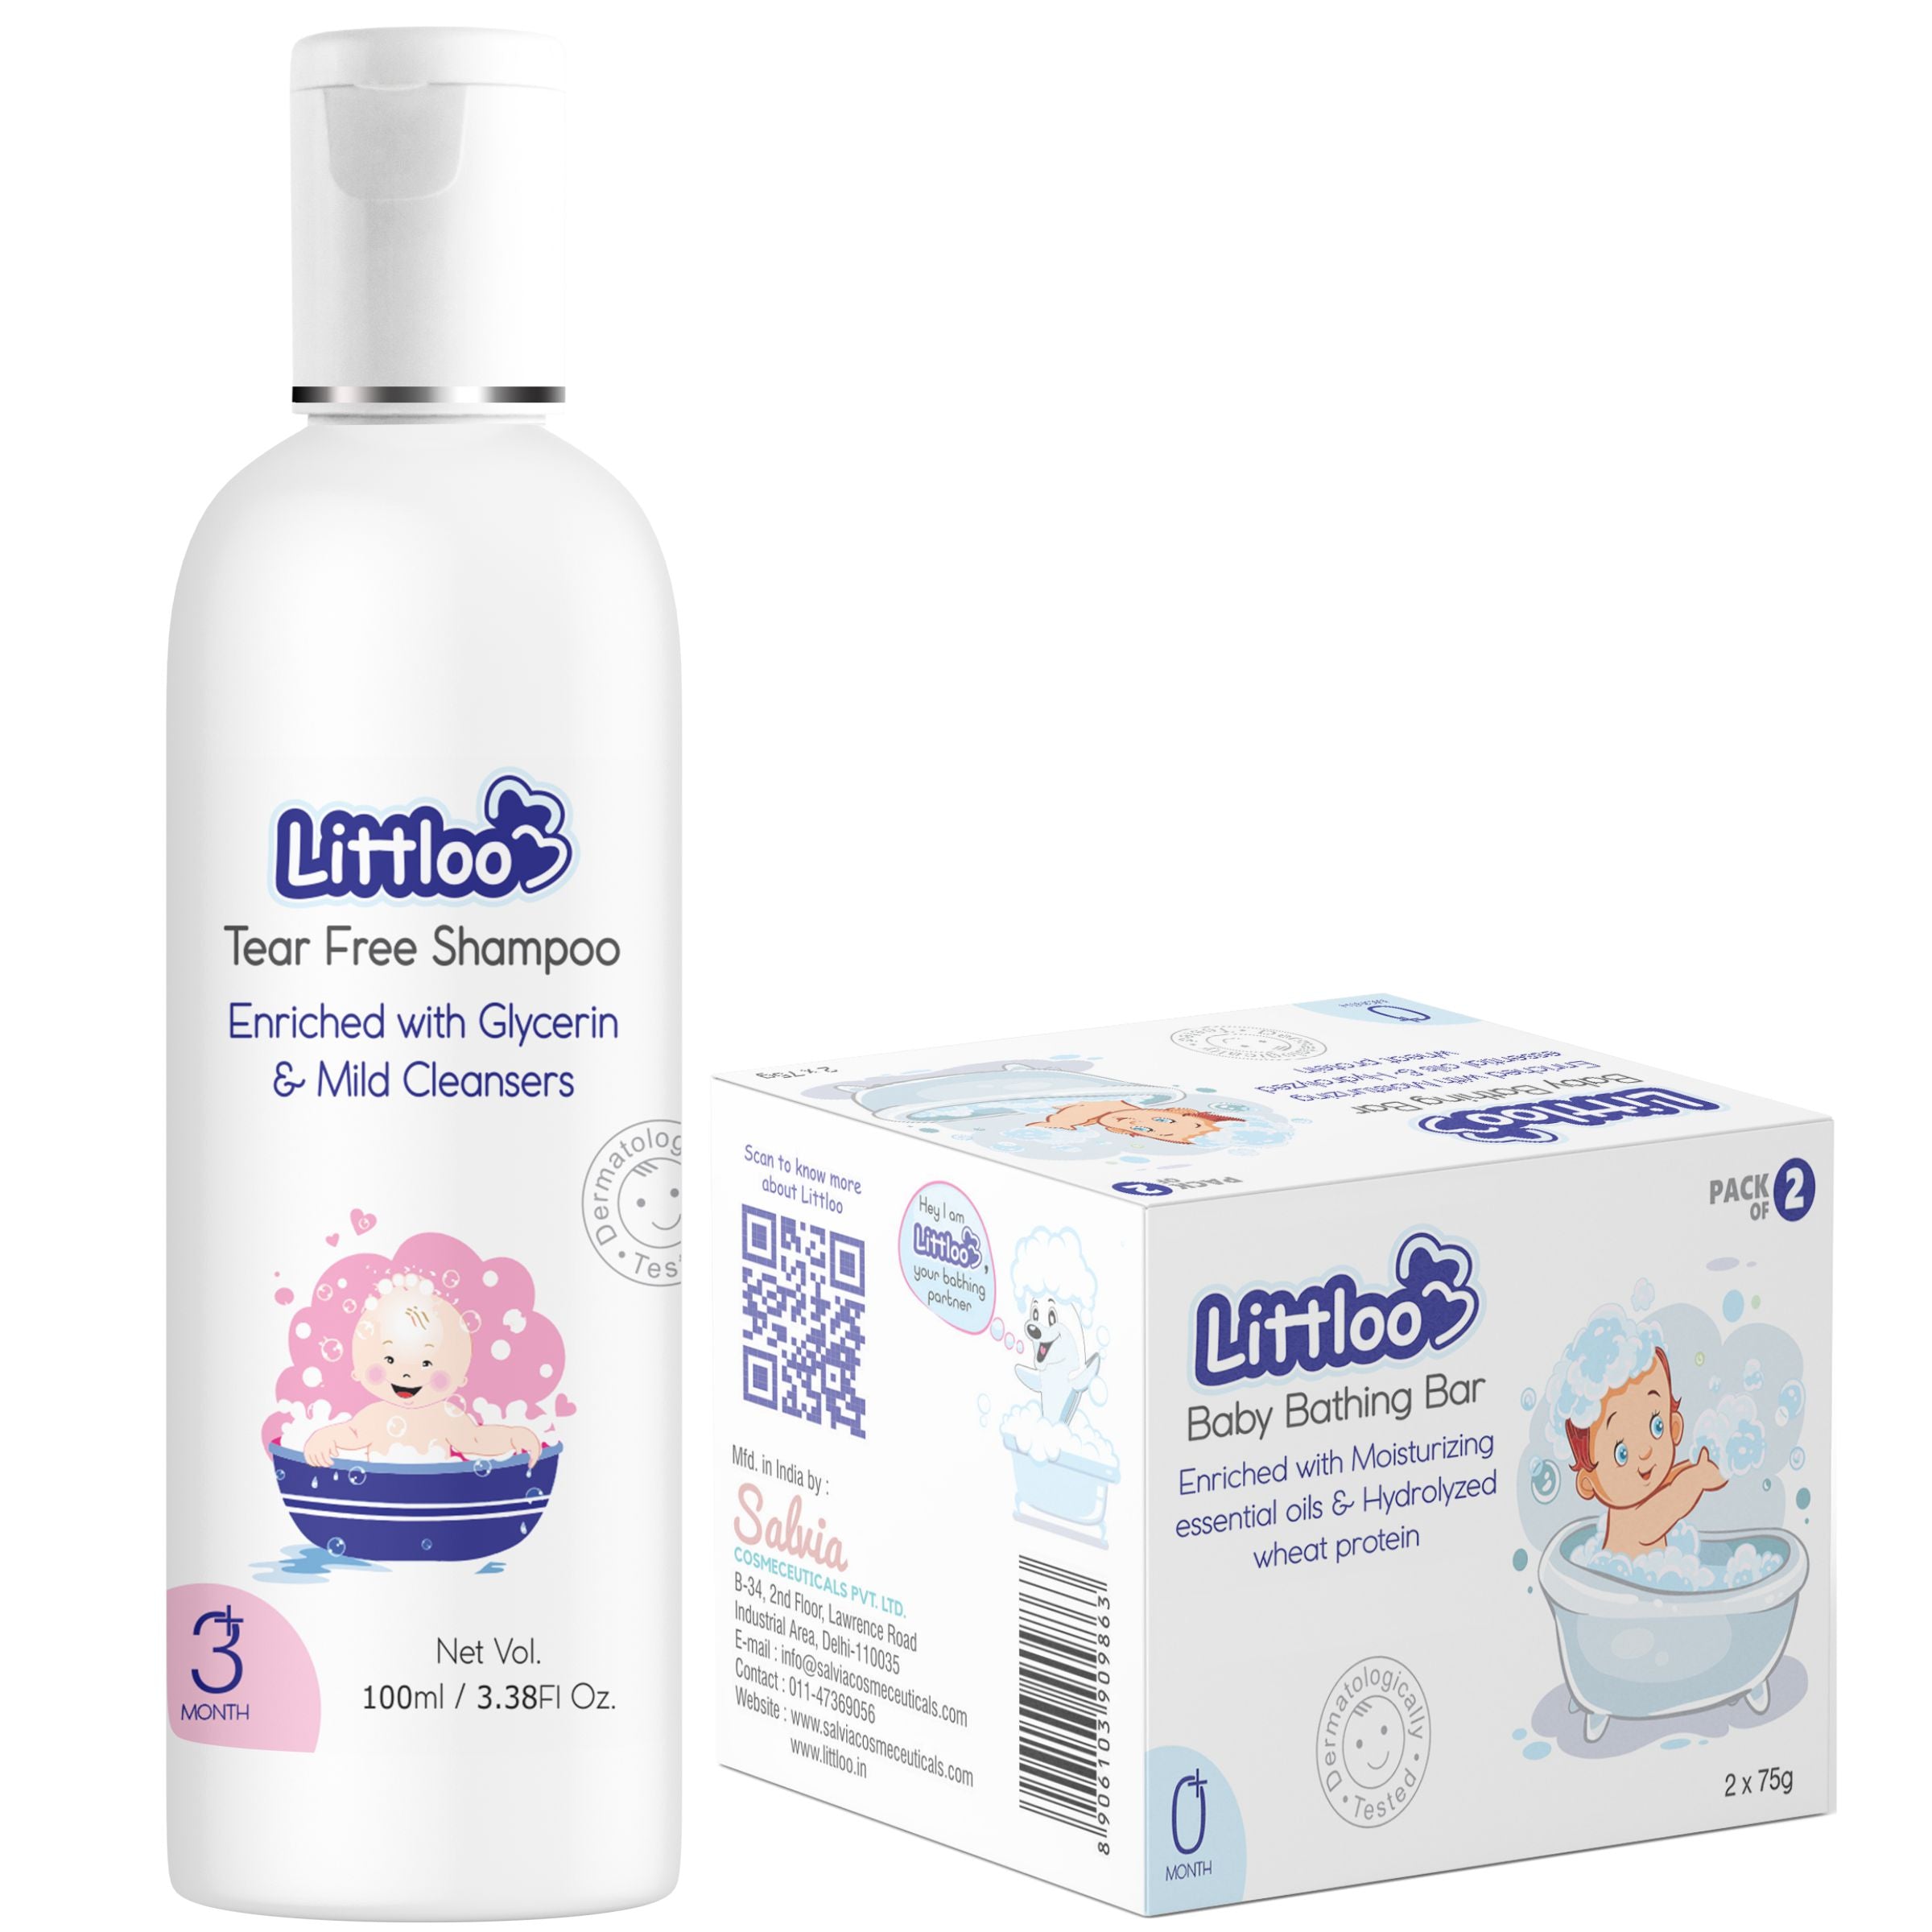 Baby Bathing & Tear Free Shampoo - Littloo